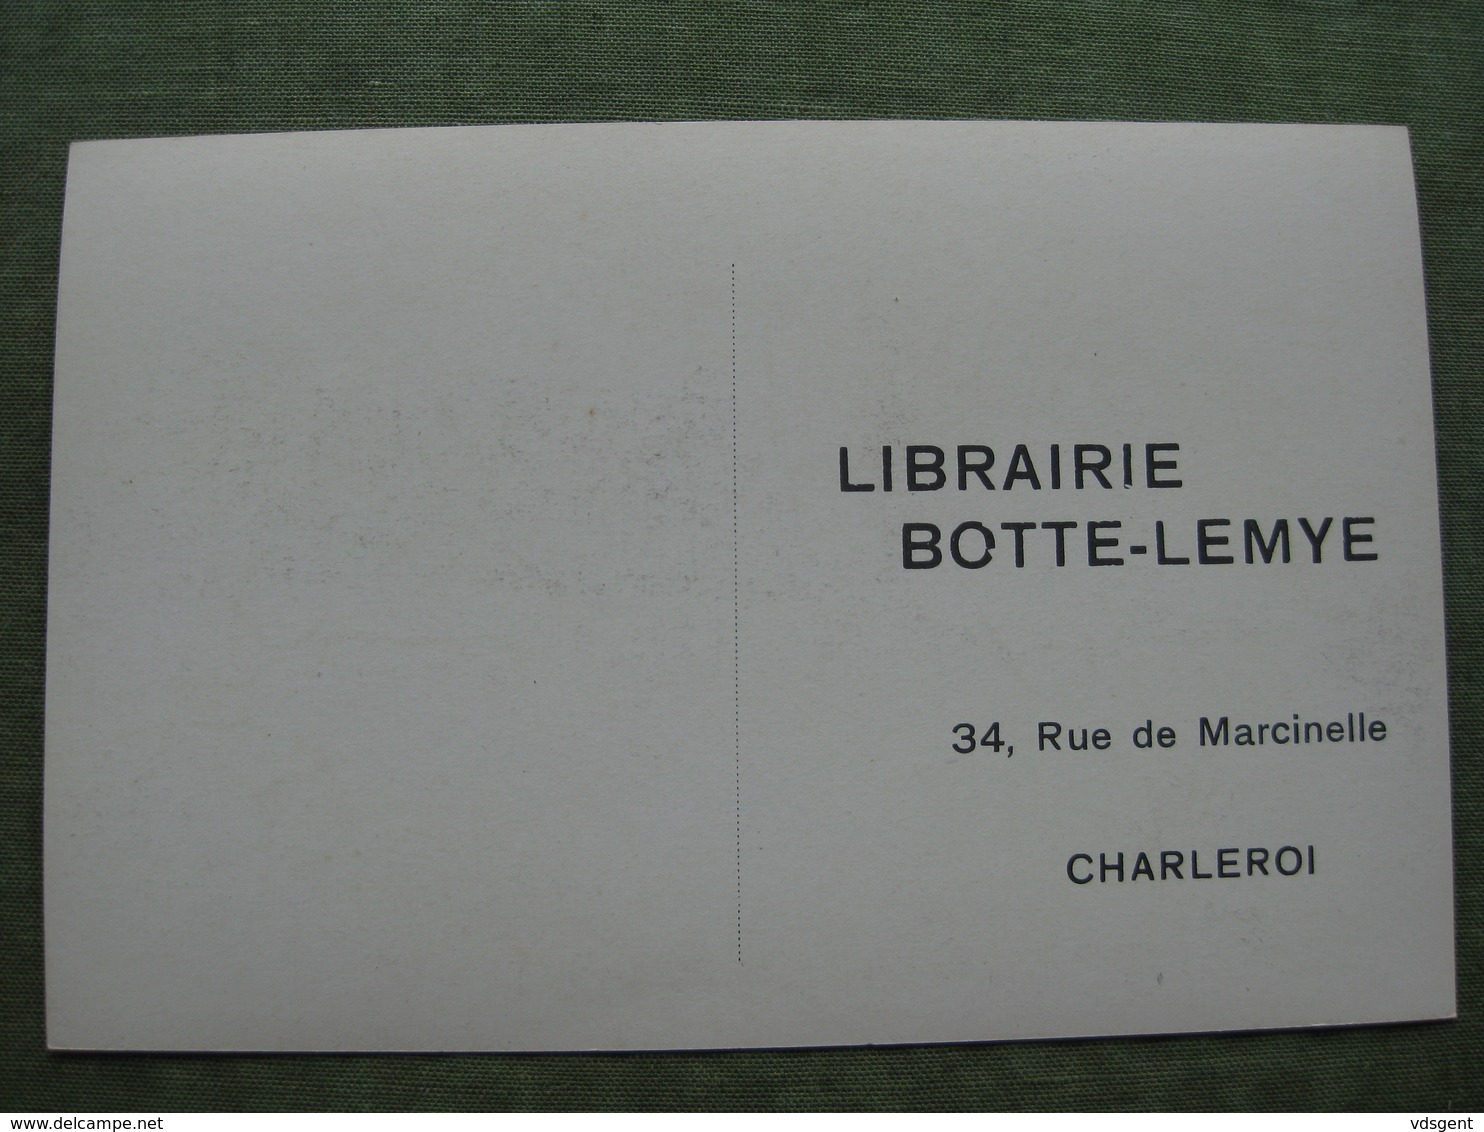 CHARLEROI - LIBRAIRIE BOTTE-LEMYE - Rue De Marcinelle 34 - Charleroi